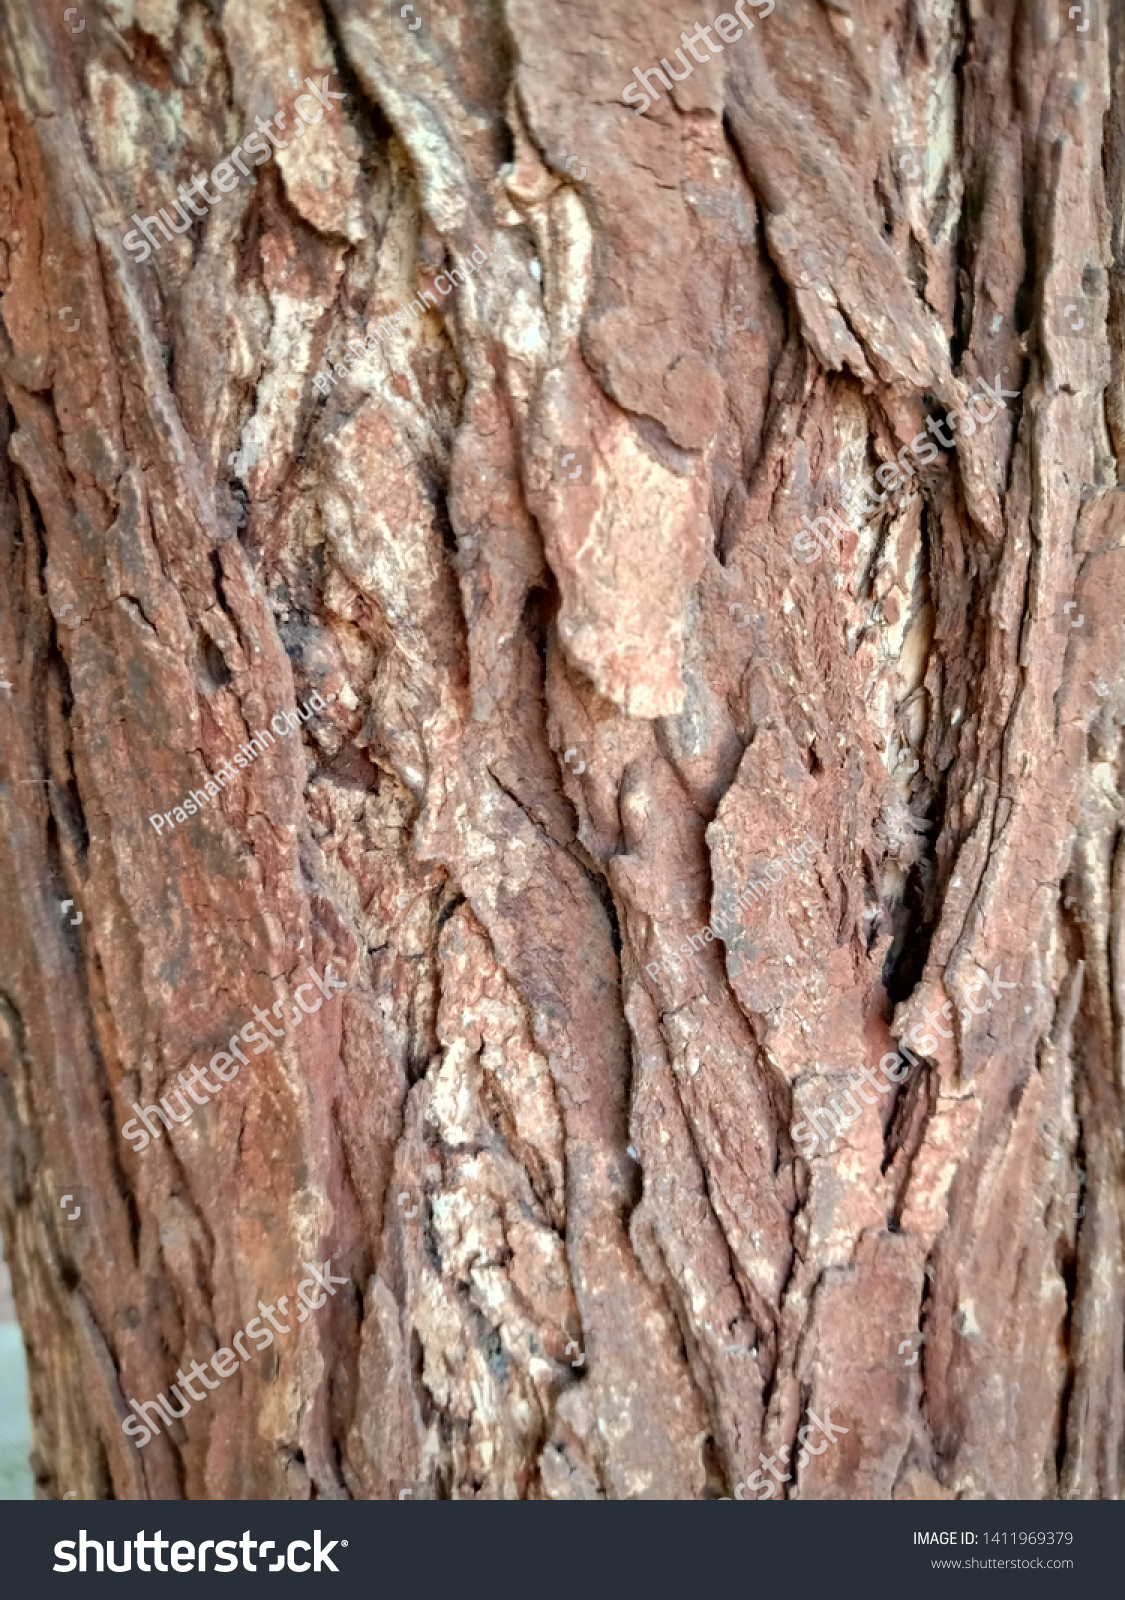 Wooden Bark of the Neem tree #1411969379